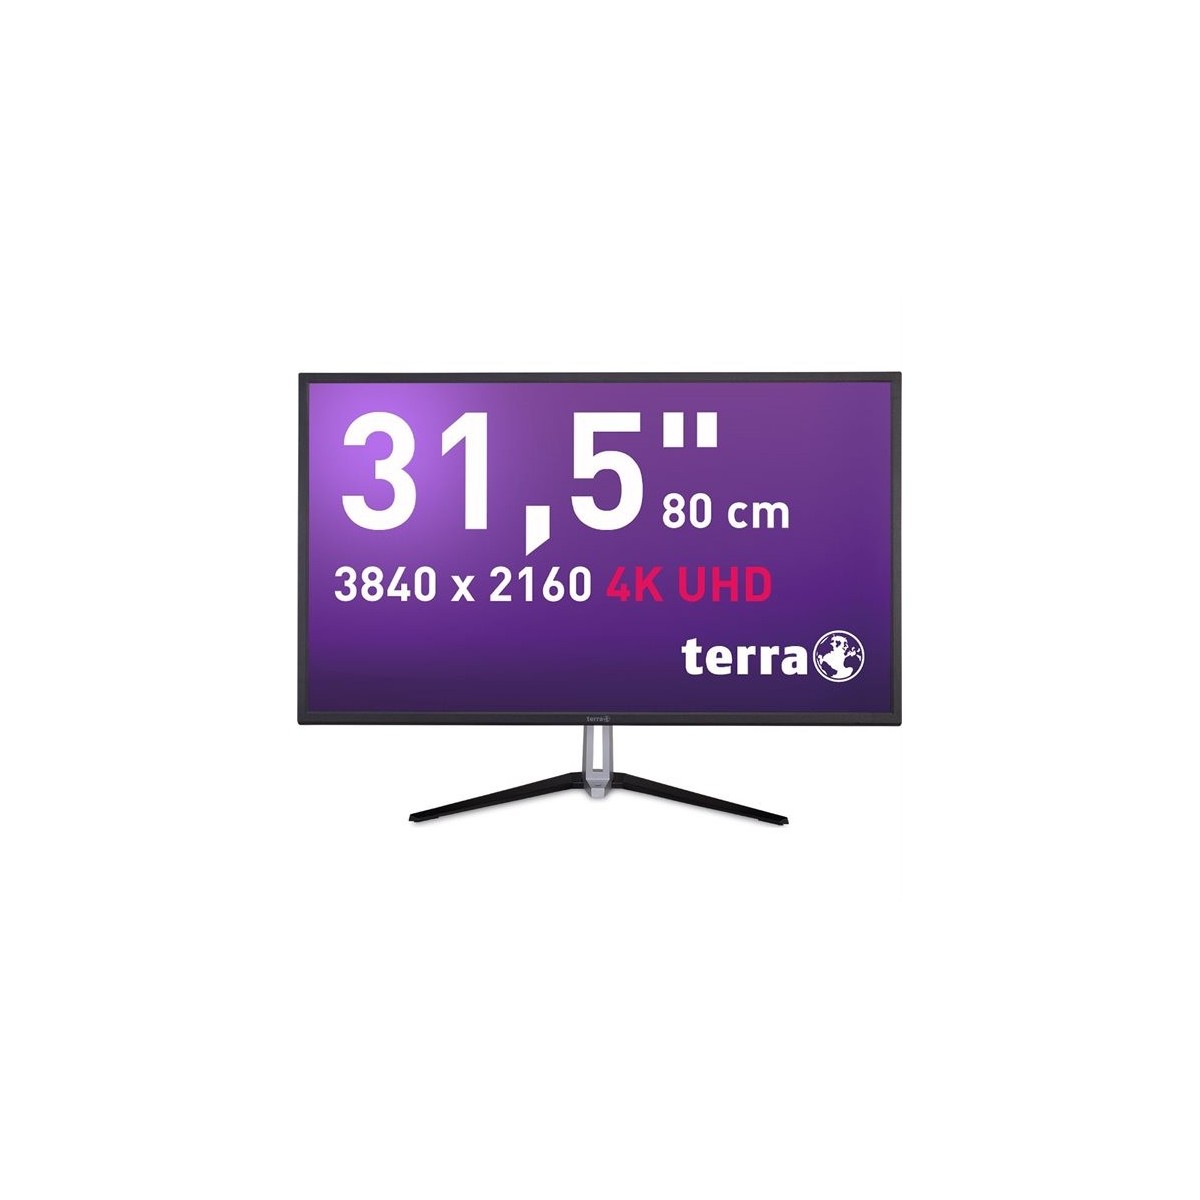 TERRA 3290W - 80 cm (31.5) - 3840 x 3160 pixels - 4K Ultra HD - LED - 5 ms - Black